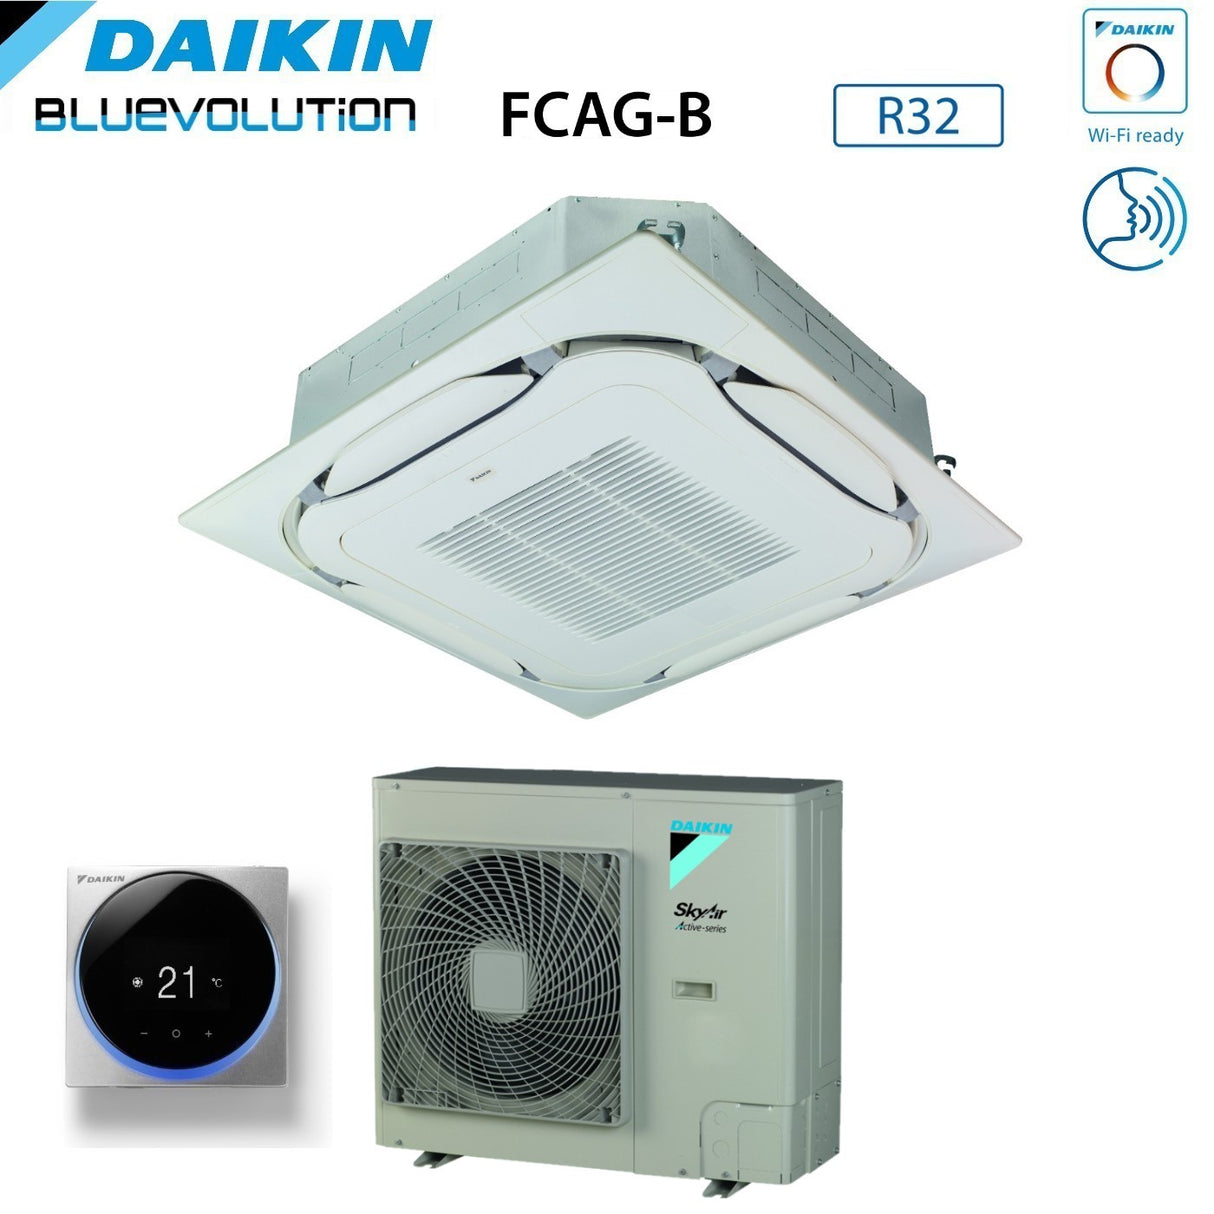 immagine-3-daikin-climatizzatore-condizionatore-daikin-bluevolution-a-cassetta-round-flow-24000-btu-fcag71b-azas71mv1-r-32-wi-fi-optional-con-griglia-standard-inclusa